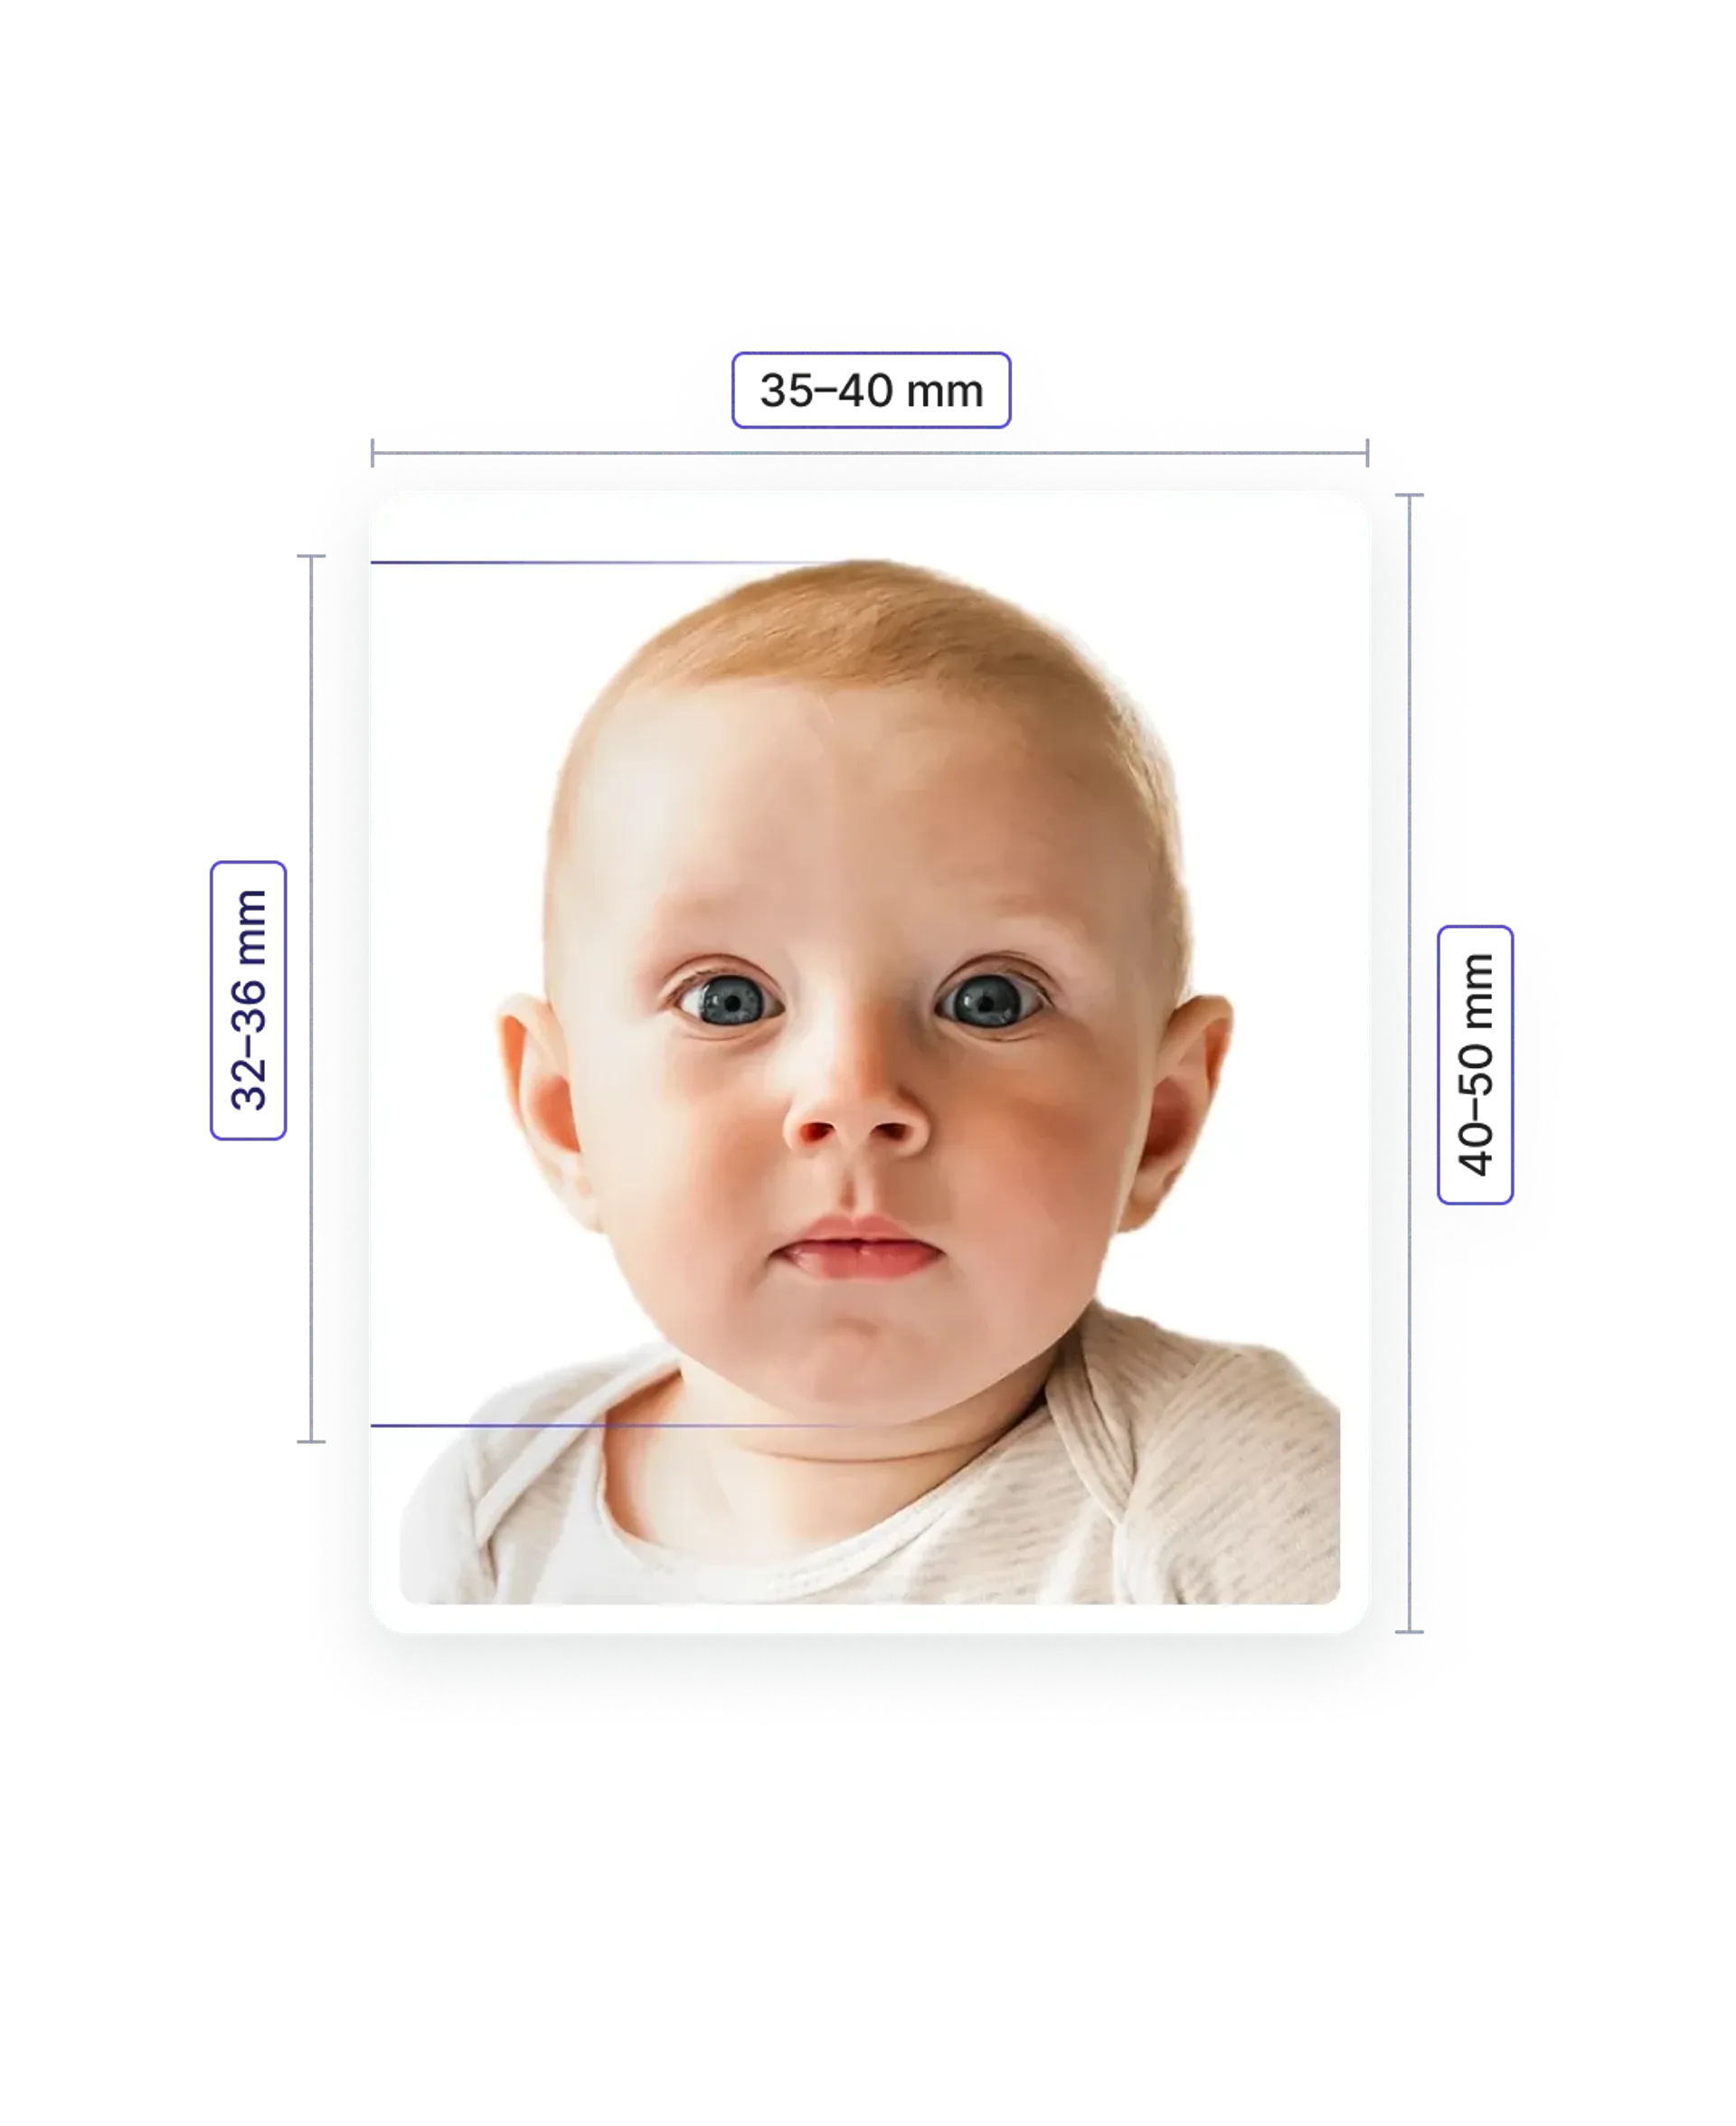 Australia Baby Passport Photo - Size & Requirements